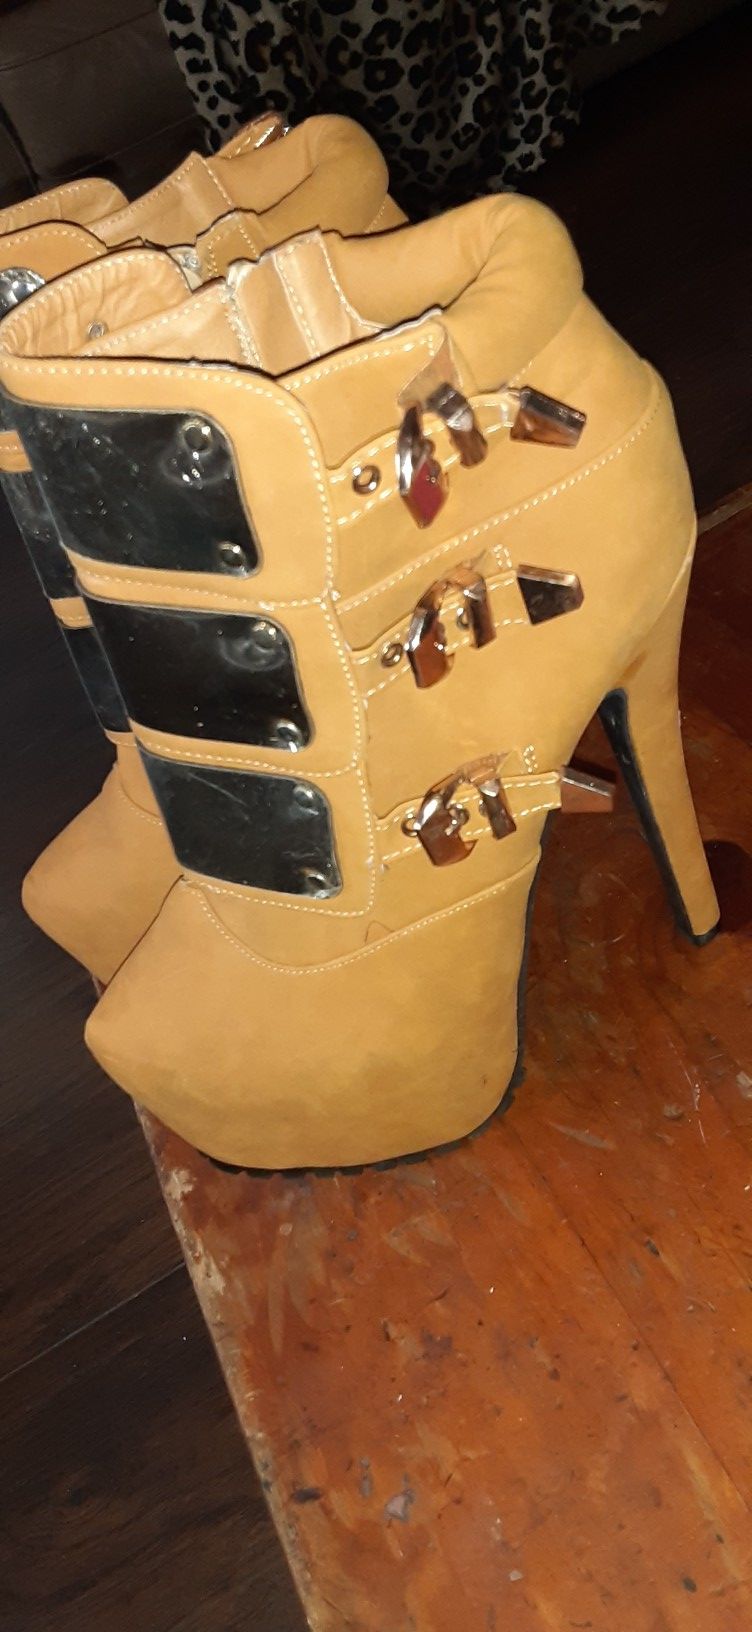 Hurry now womens tan high heel boots good shape size 9